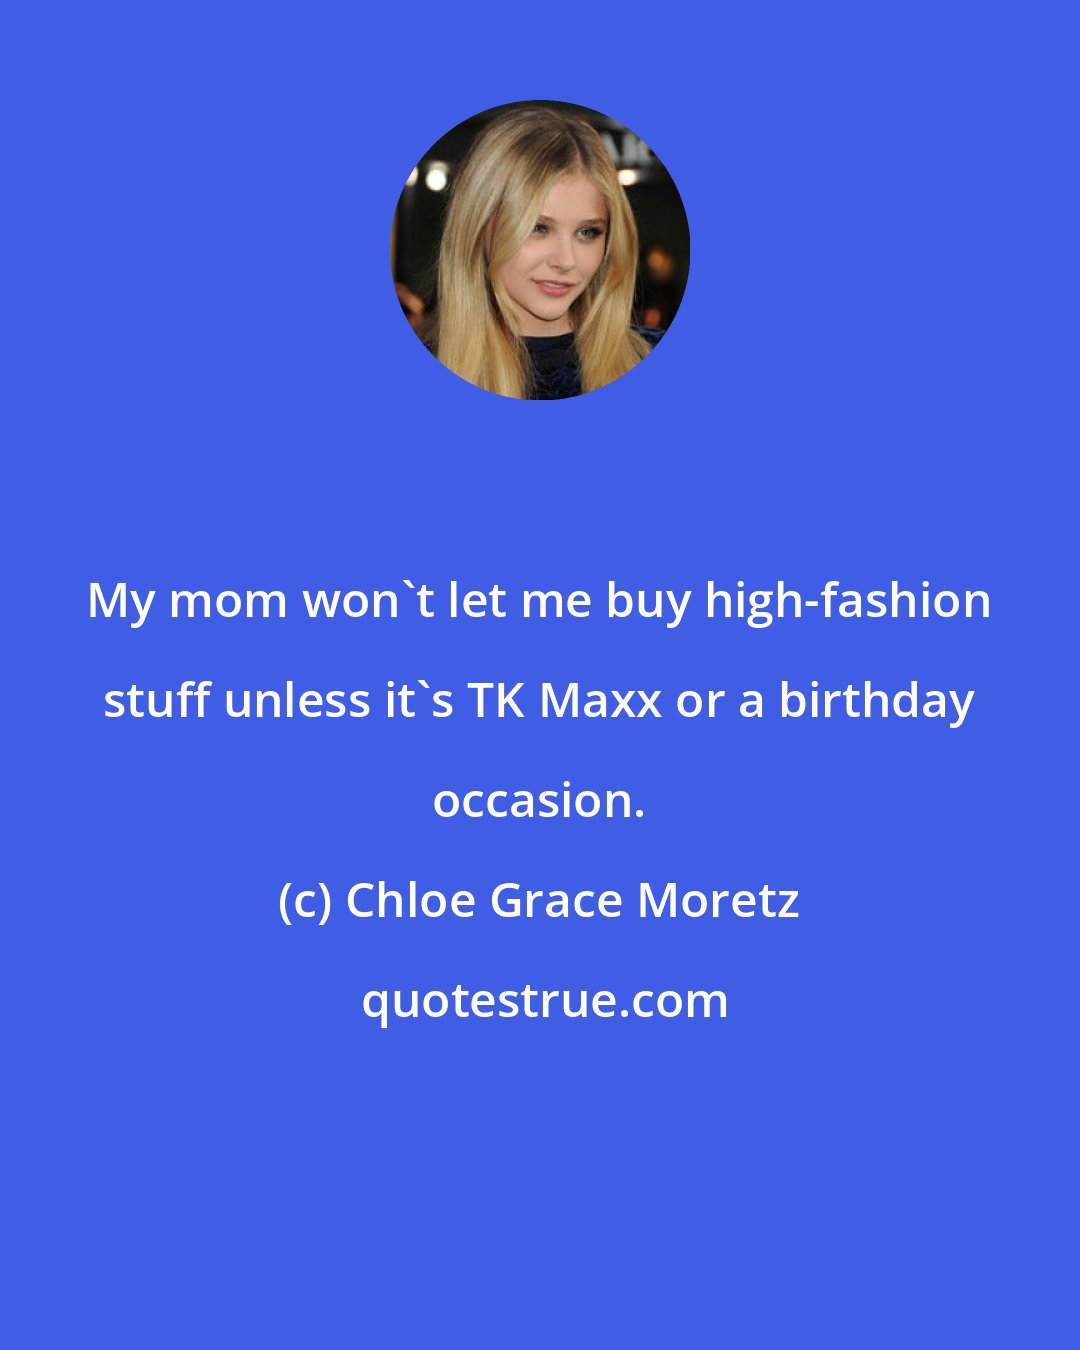 Chloe Grace Moretz: My mom won't let me buy high-fashion stuff unless it's TK Maxx or a birthday occasion.